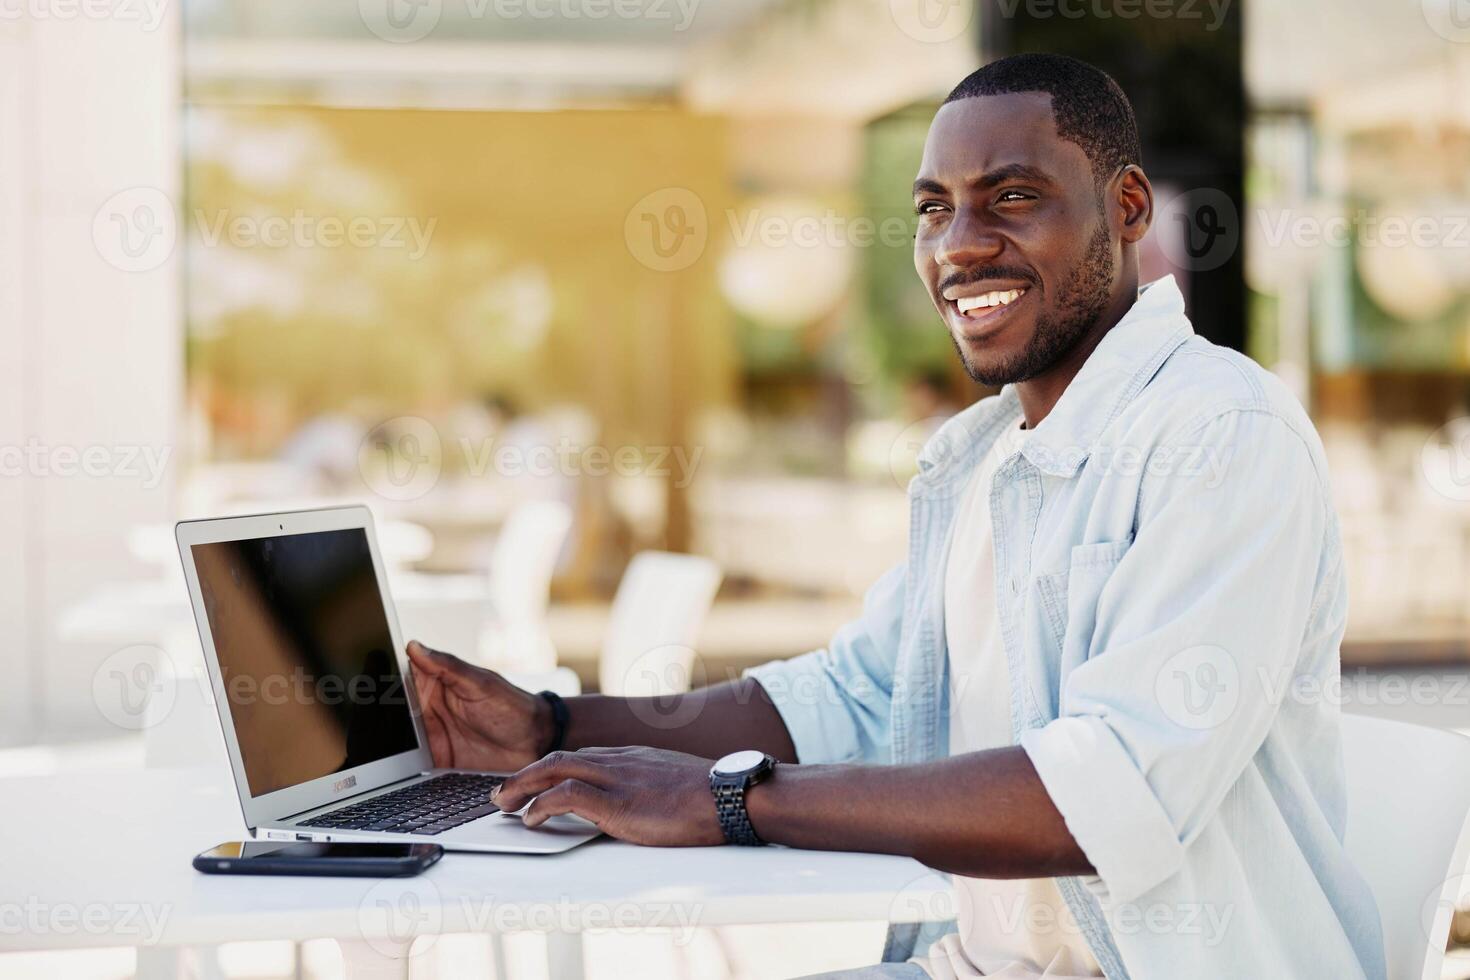 Person happy adult smile cheerful young computer portrait business male internet entrepreneur men photo